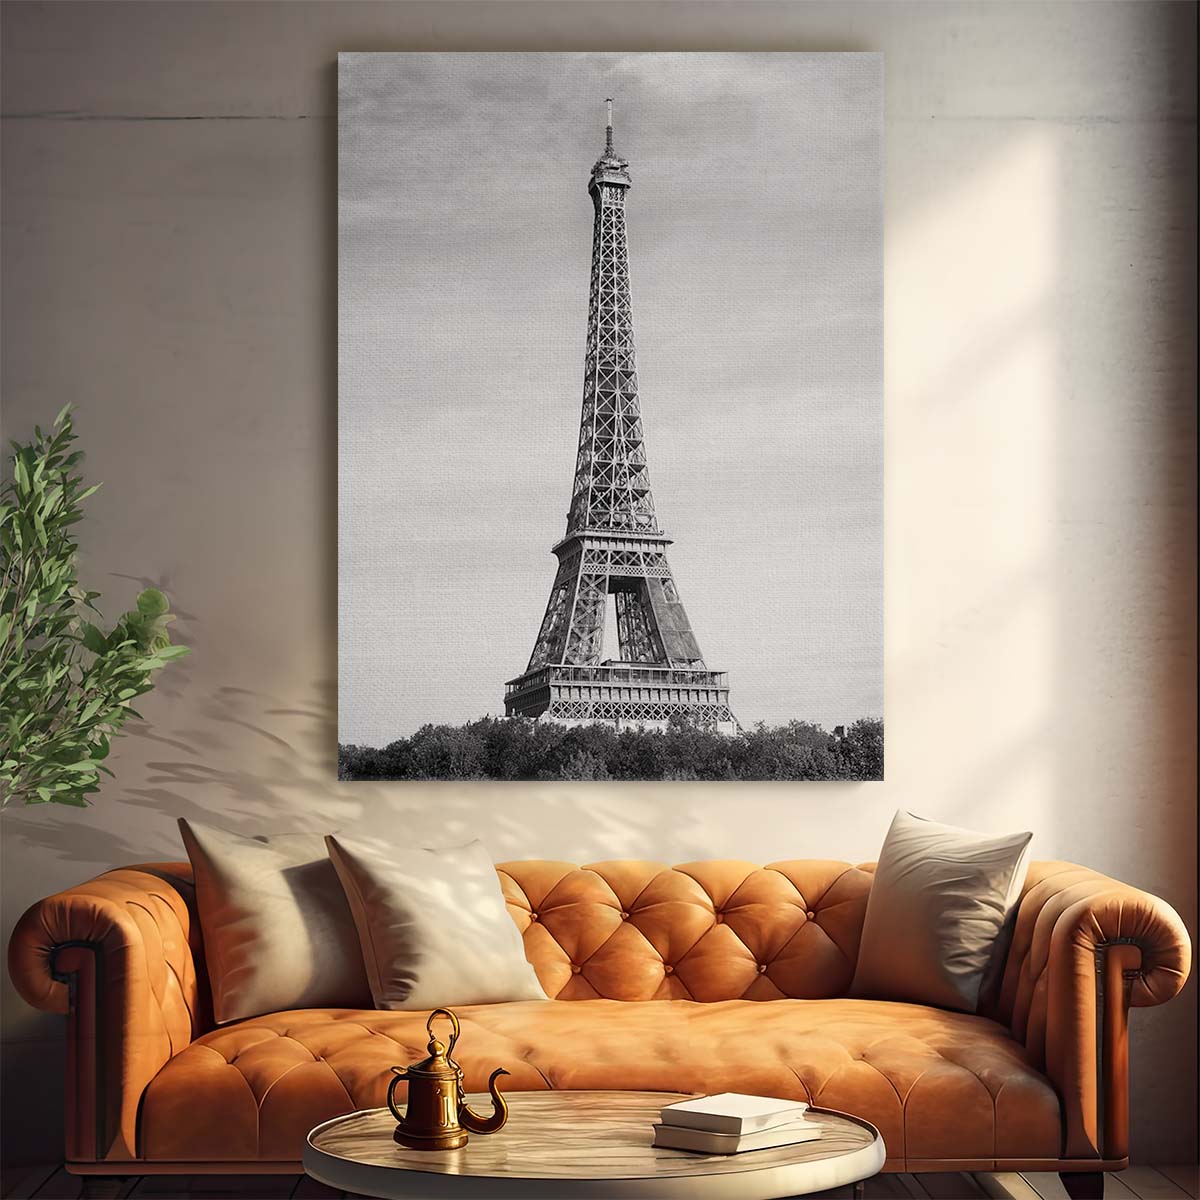 Paris Eiffel Tower Monochrome Photography Iconic Urban Landmark by Luxuriance Designs, made in USA